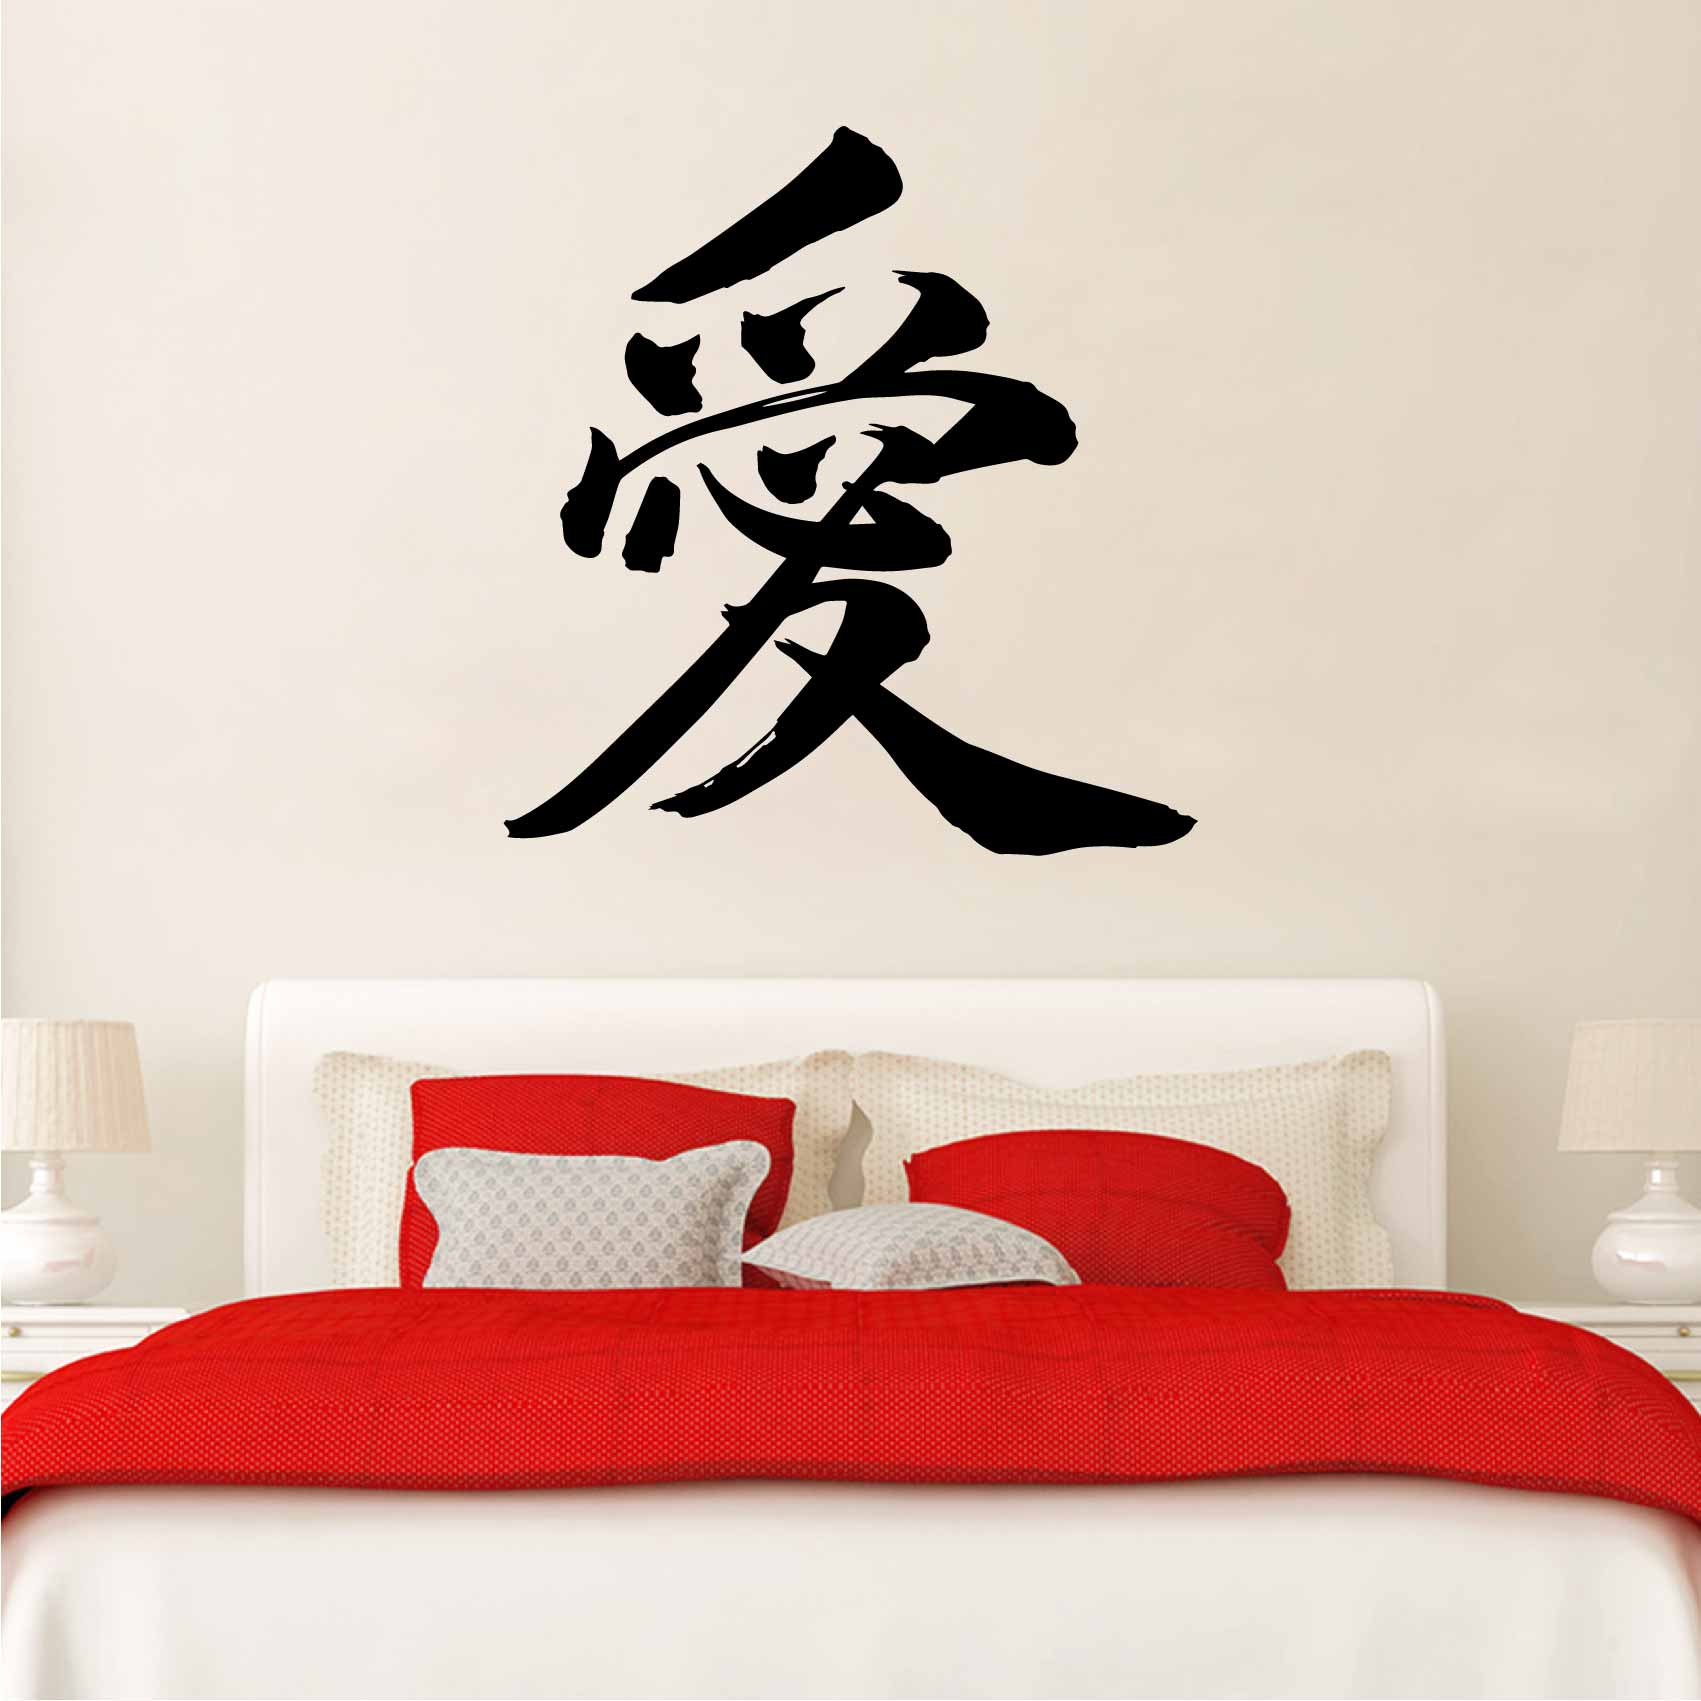 stickers-signe-amour-japonais-ref27spirituel-stickers-muraux-spirituel-autocollant-salon-chambre-cuisine-sticker-mural-spiritualité